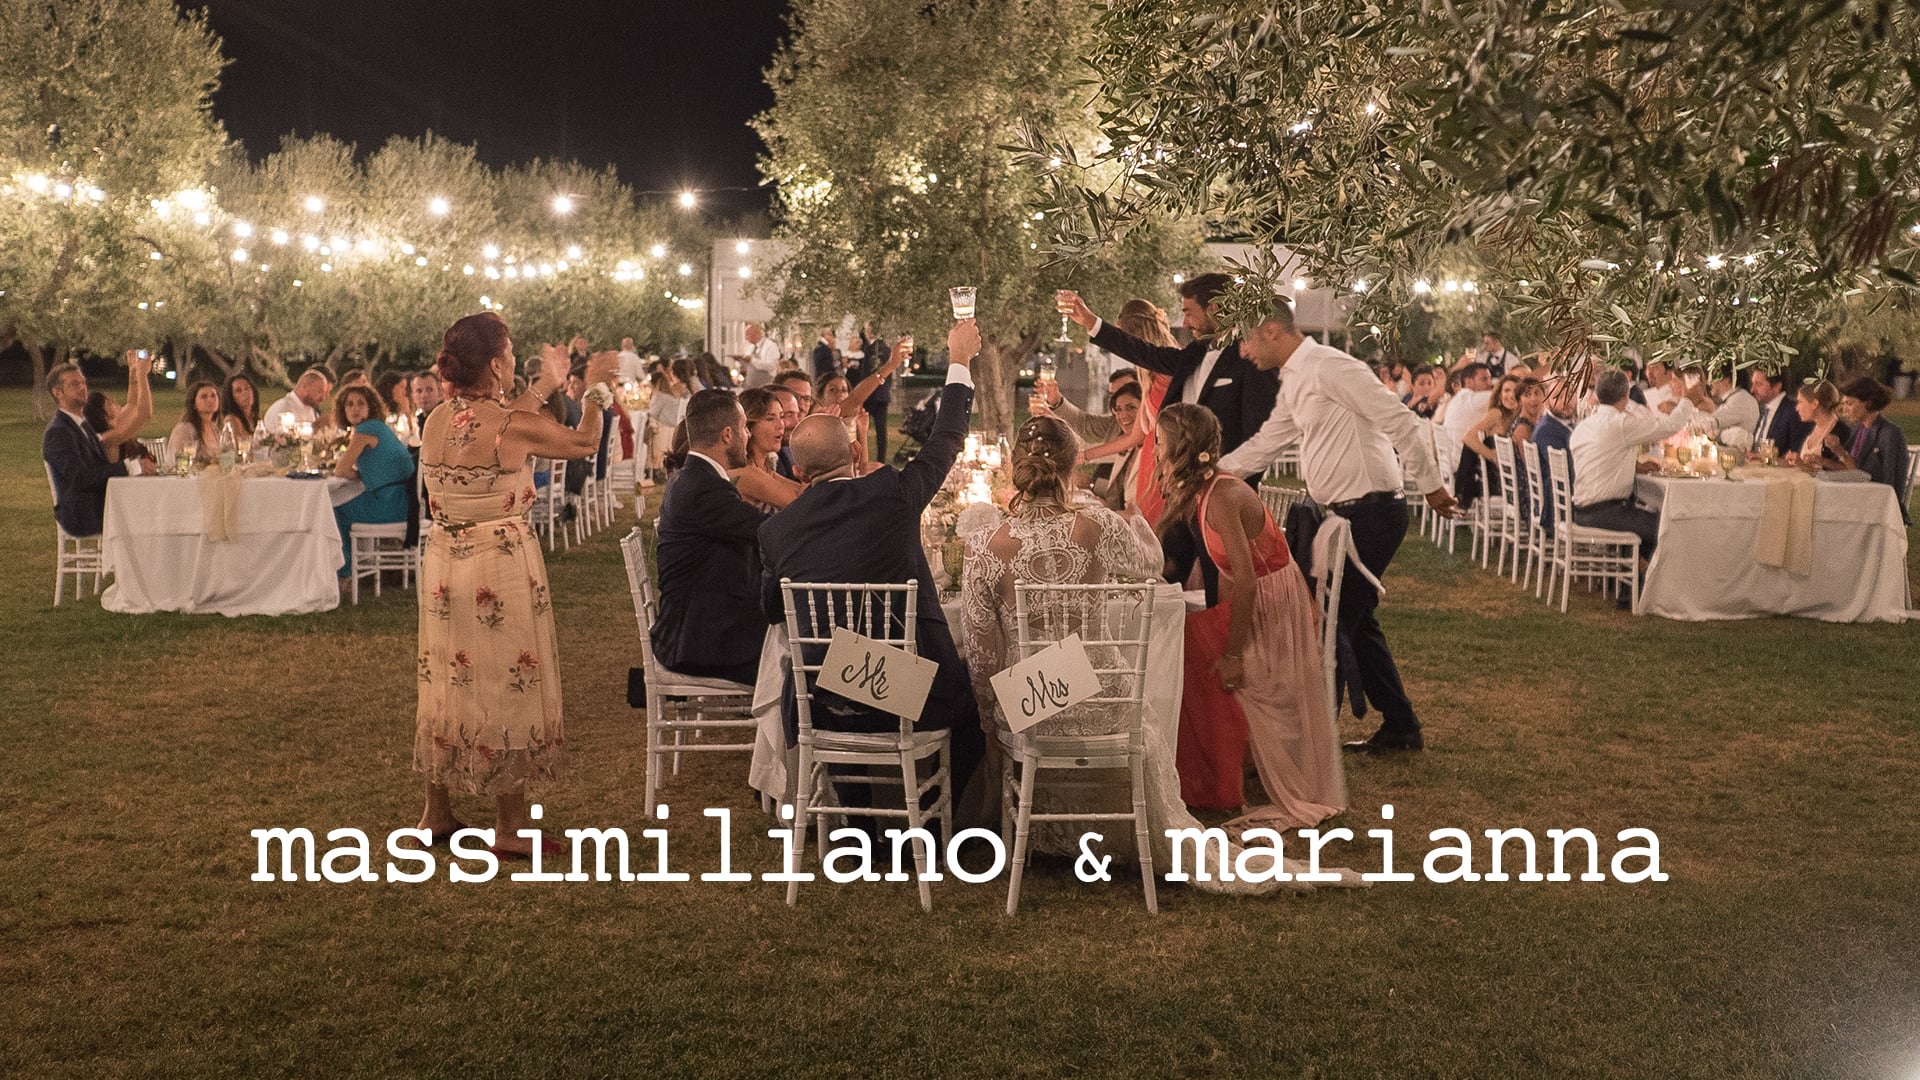 Massimiliano & Marianna  |  trailer  |  from Dubai